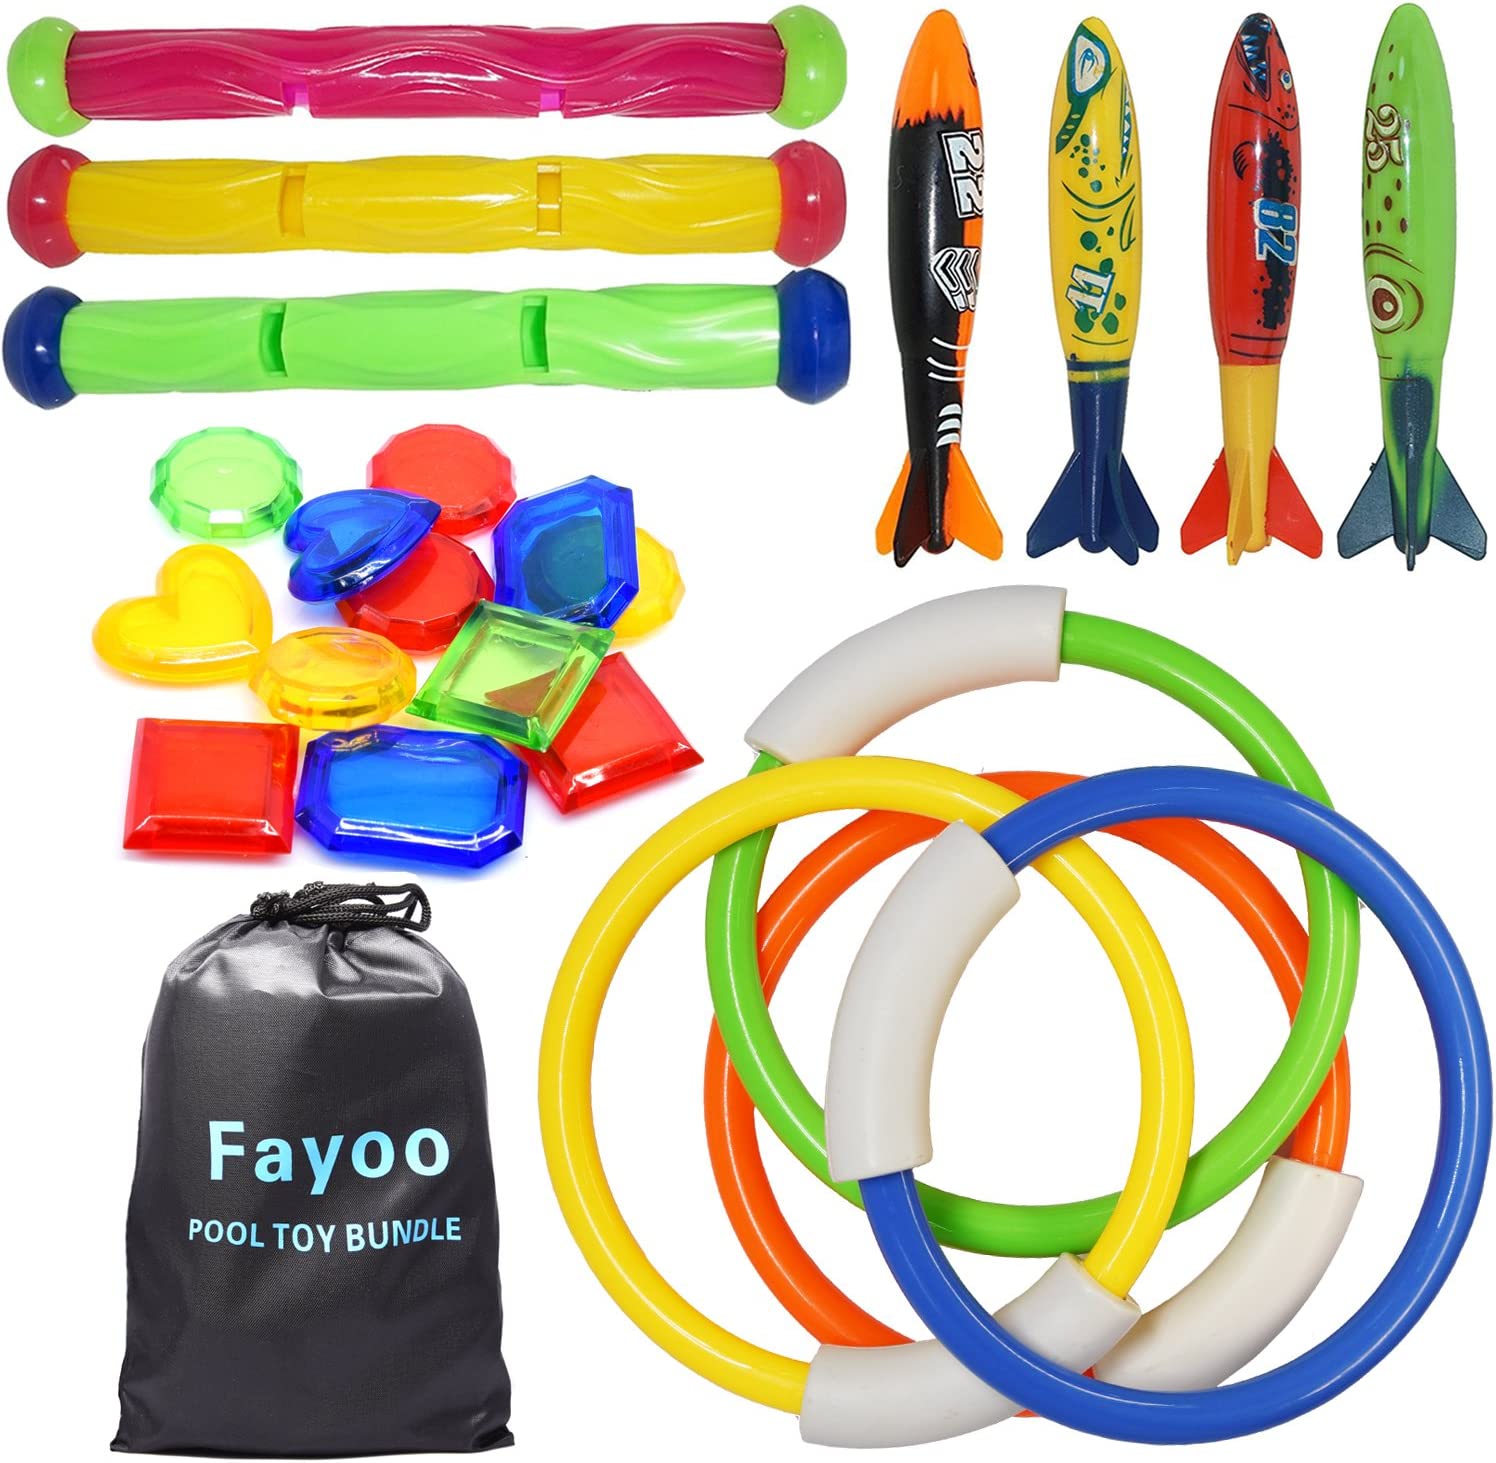 Fayoo 23 Pack Underwater Swimming/Diving Pool Toys Diving Rings(4 Pcs), Toypedo Bandits(4 Pcs), Diving Sticks(3 Pcs) with Under Water Treasures (12 Pcs) Gift Set Bundle